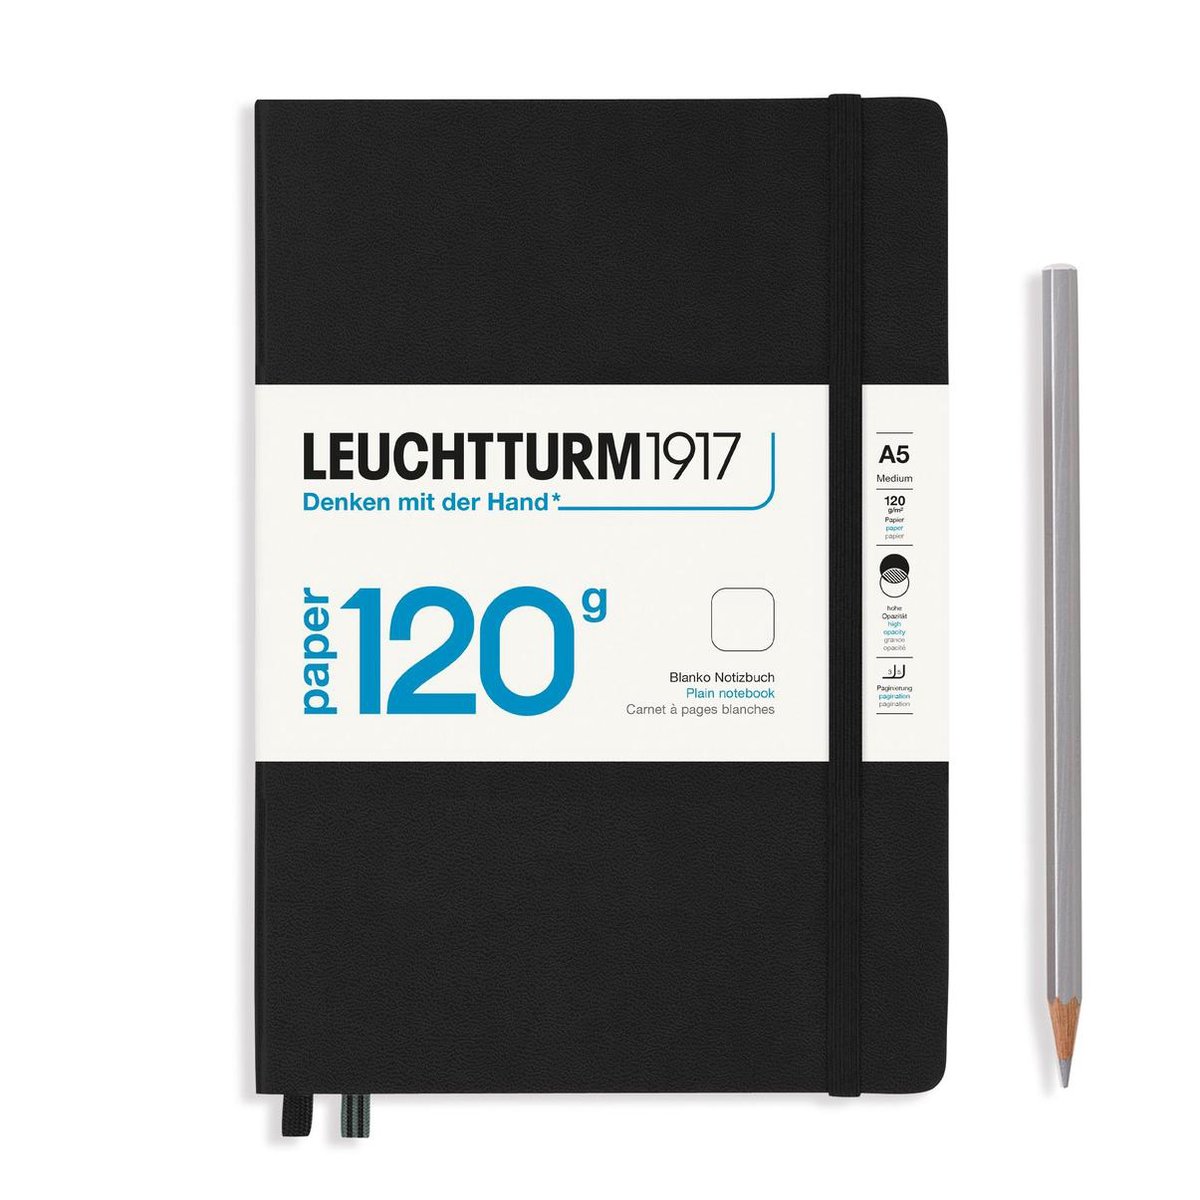 Leuchtturm1917 A5 Medium 120 grams editie Notitieboek blanco Black